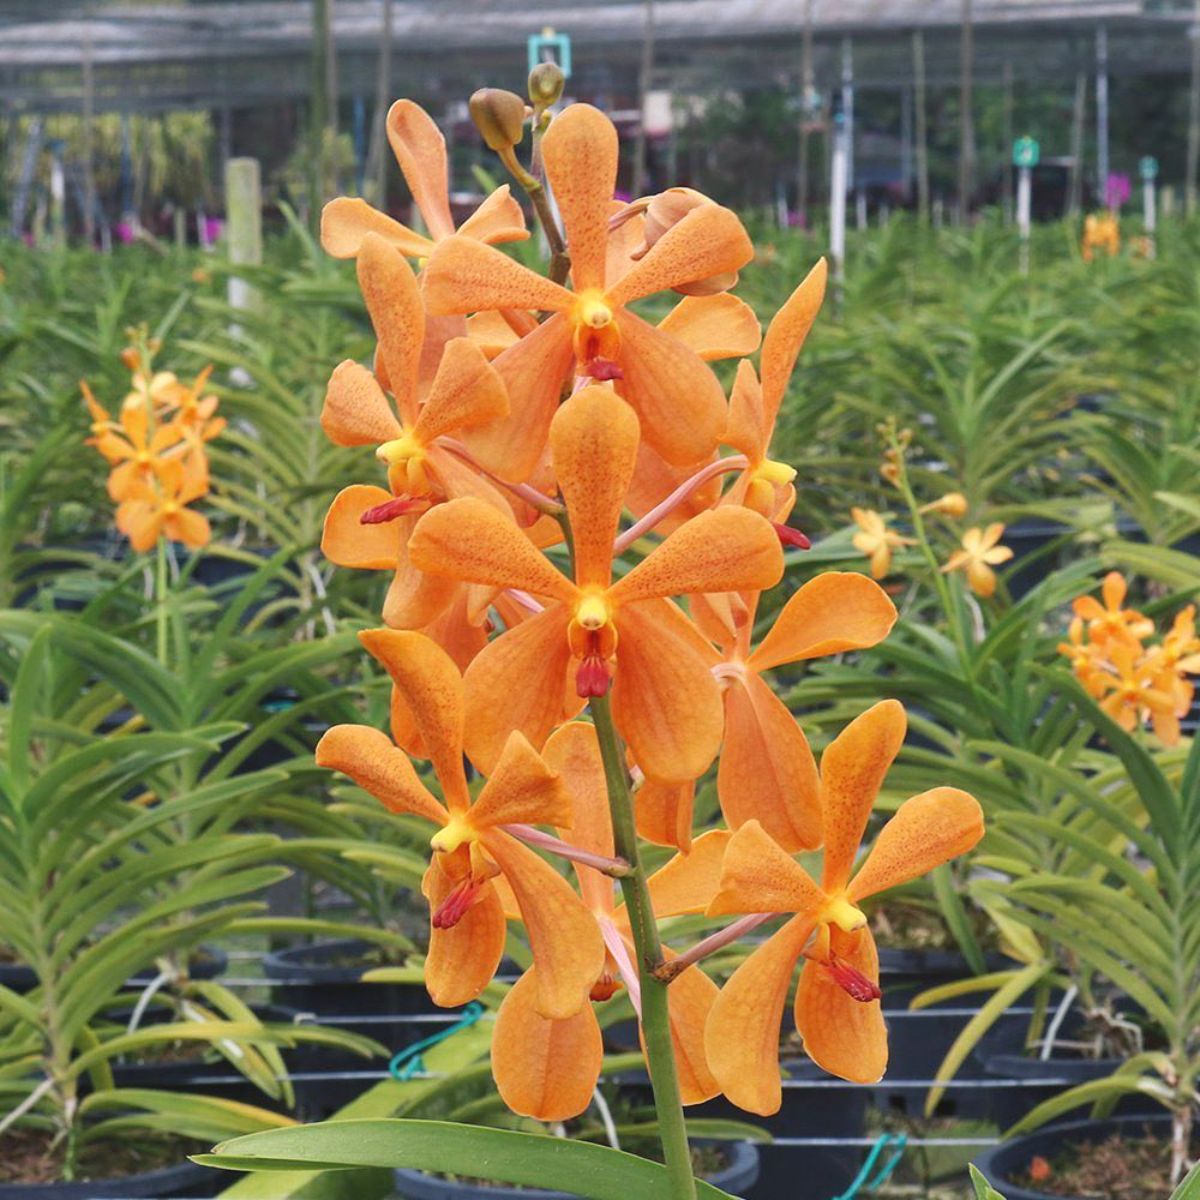 Mokara Oomyai Orange Orchid - Vibrant Orange Blooms for Sale